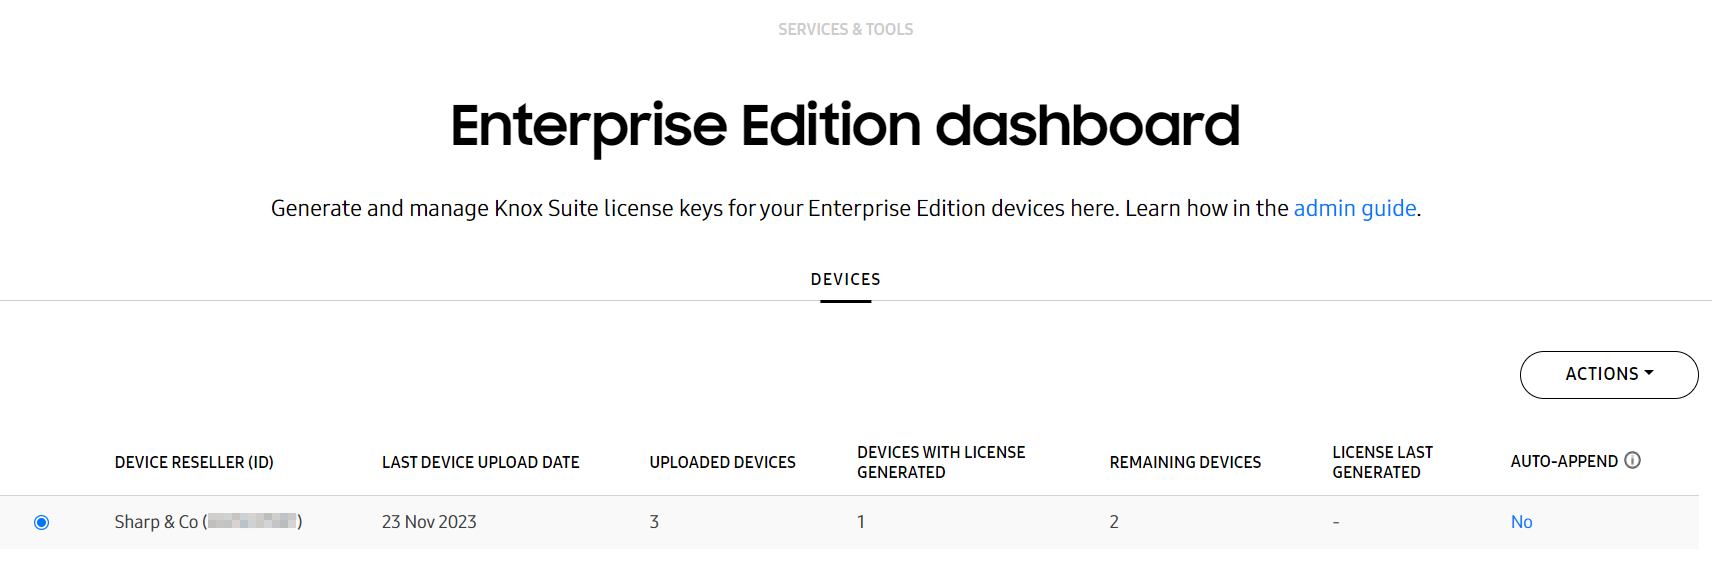 Enterprise edition dashboard